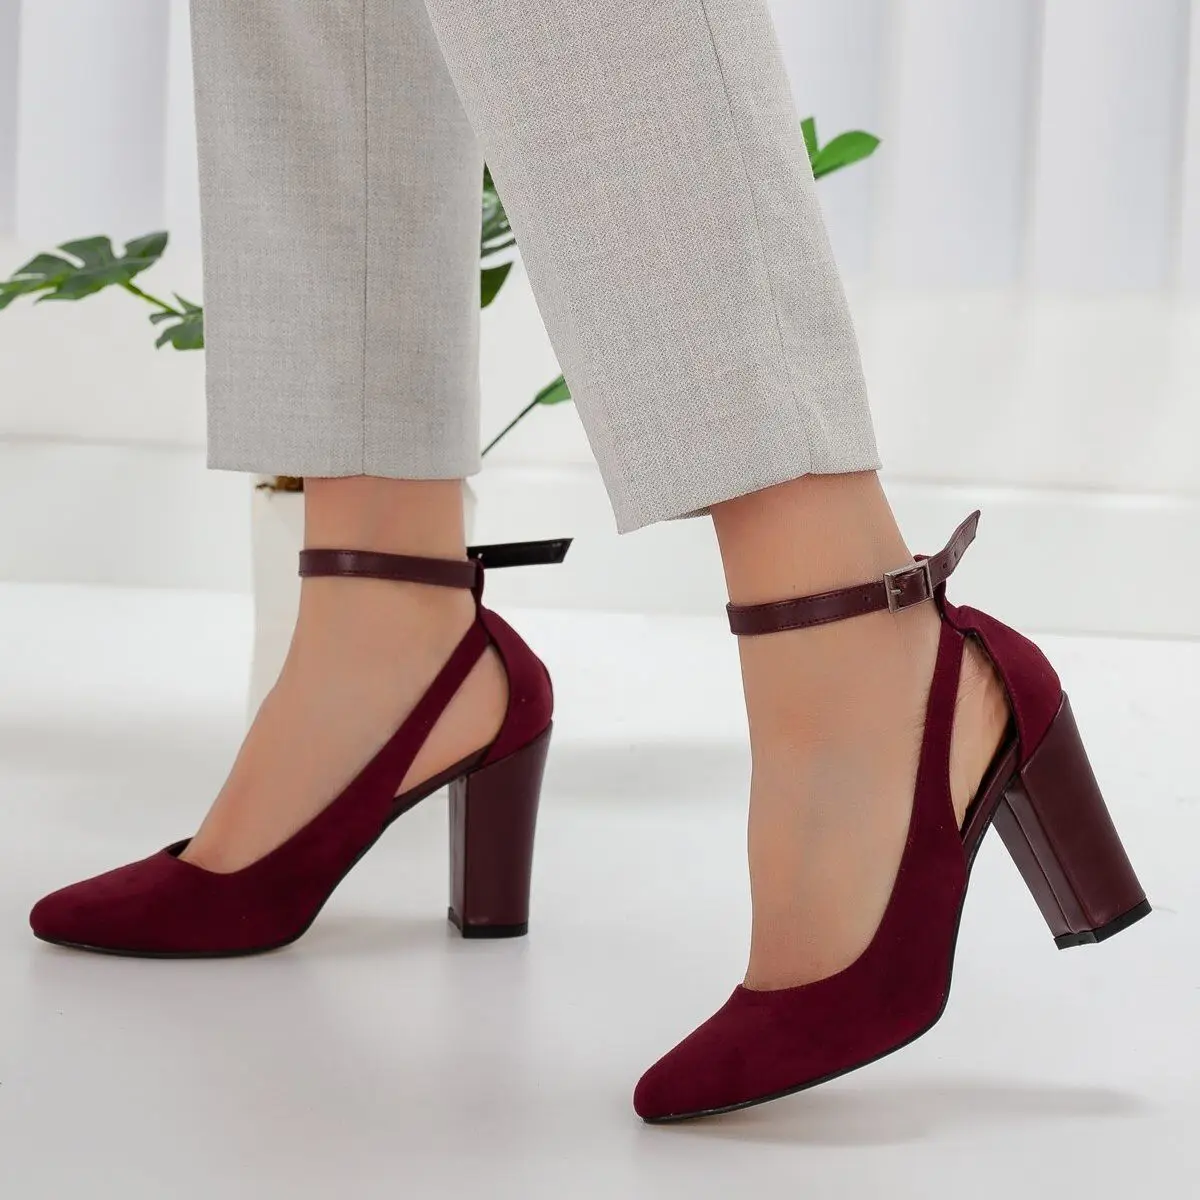 Buy Where's That From High Heel Sandals in Saudi, UAE, Kuwait and Qatar |  VogaCloset